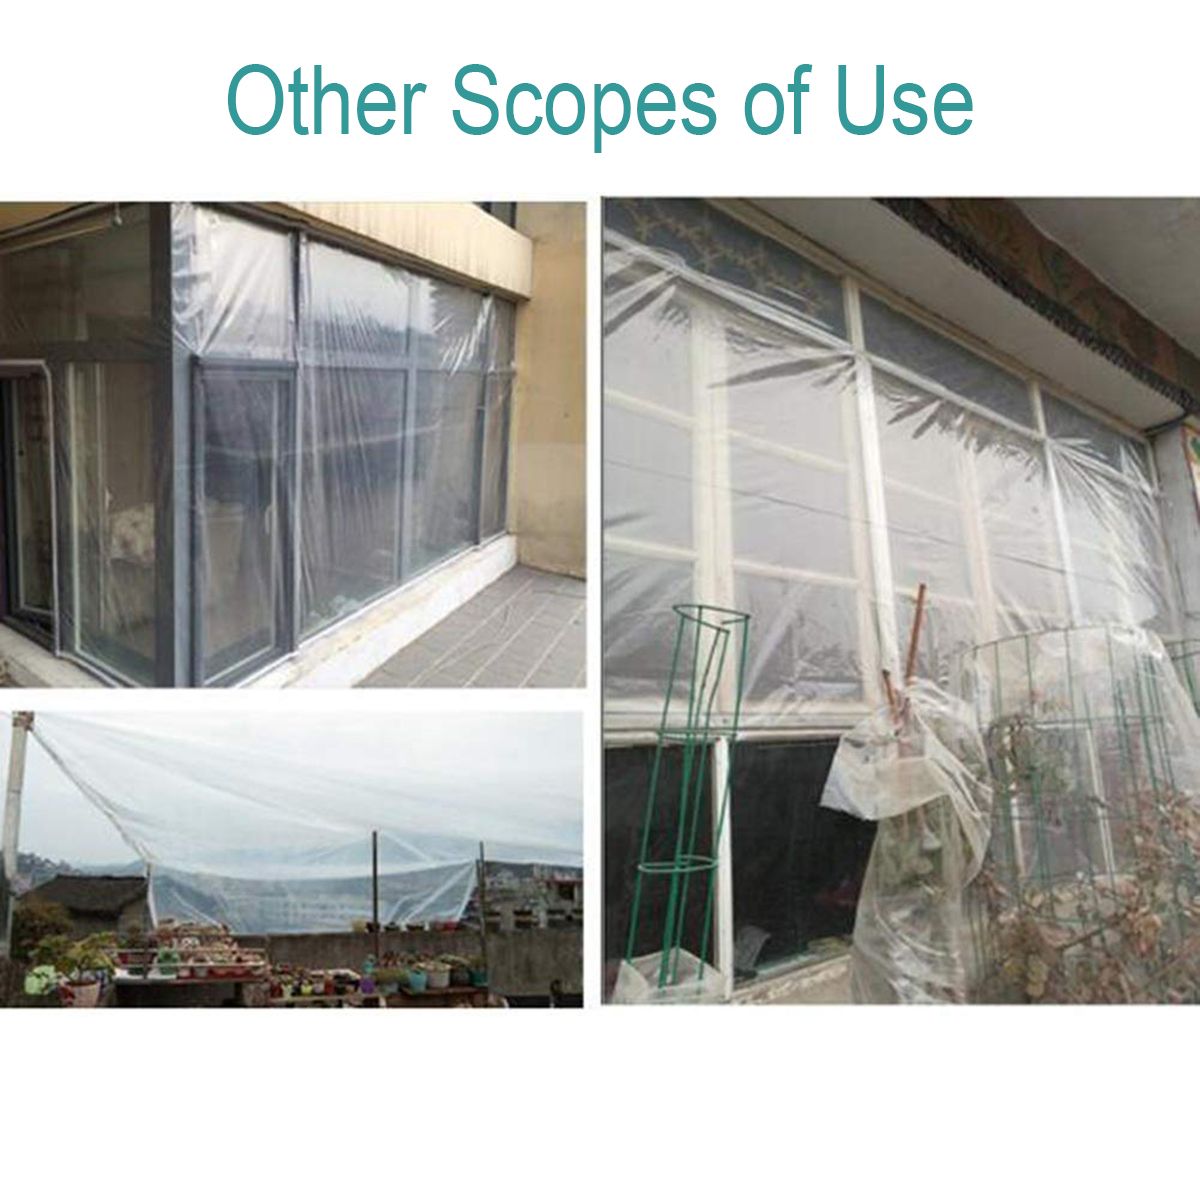 Rainproof-Cloth-Cover-Sunblock-Garden-Sun-Shade-Transparent-Canopy-Protection-Net-1730862